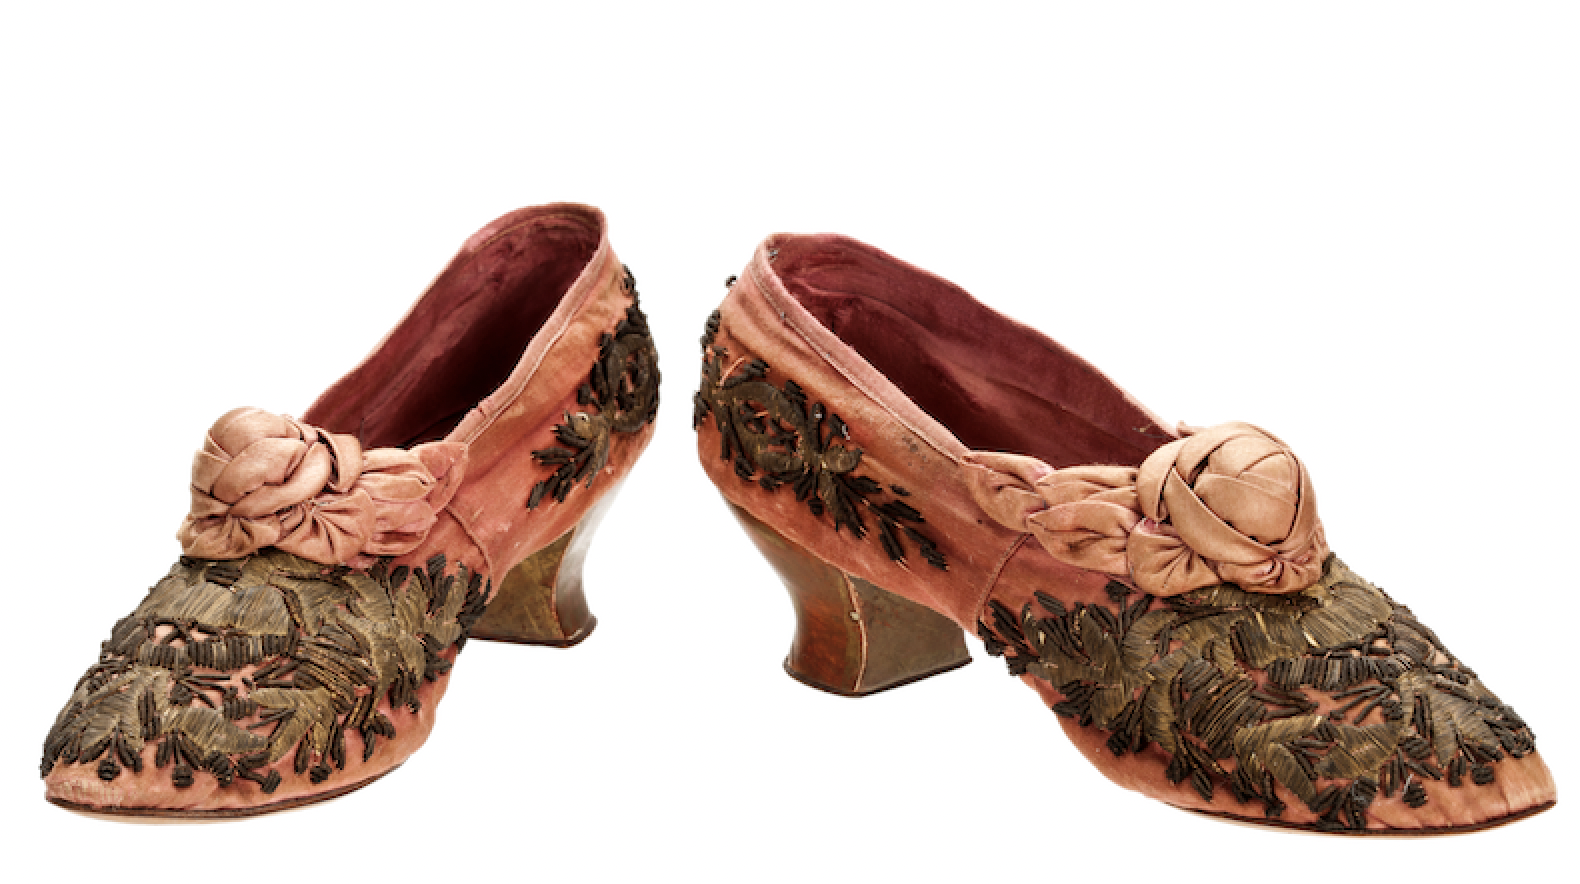 Unidentified maker, boudoir shoes, 1867, Paris, France. Silk, embroidery, metallic thread. Stuart Weitzman Collection, no. 101. Photo credit: Glenn Castellano, New-York Historical Society